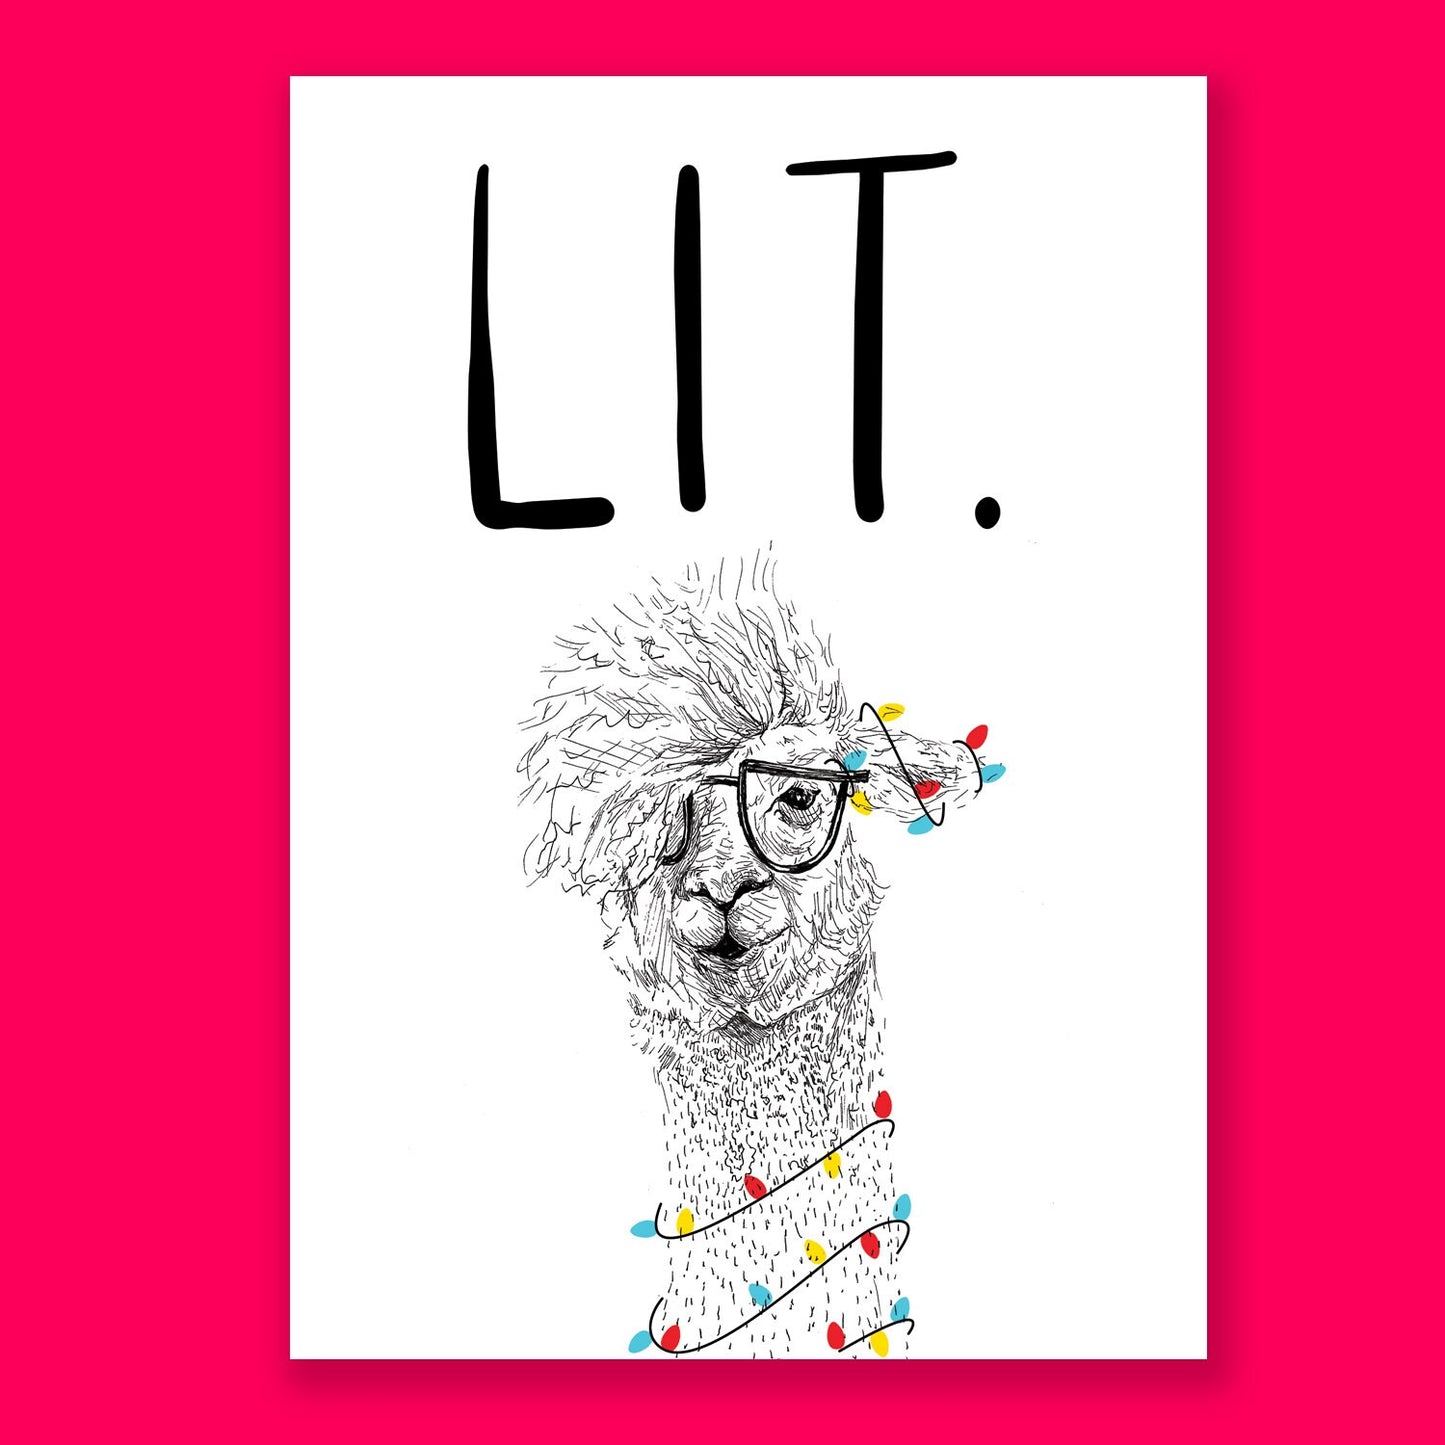 Lit Llama | Holiday Card